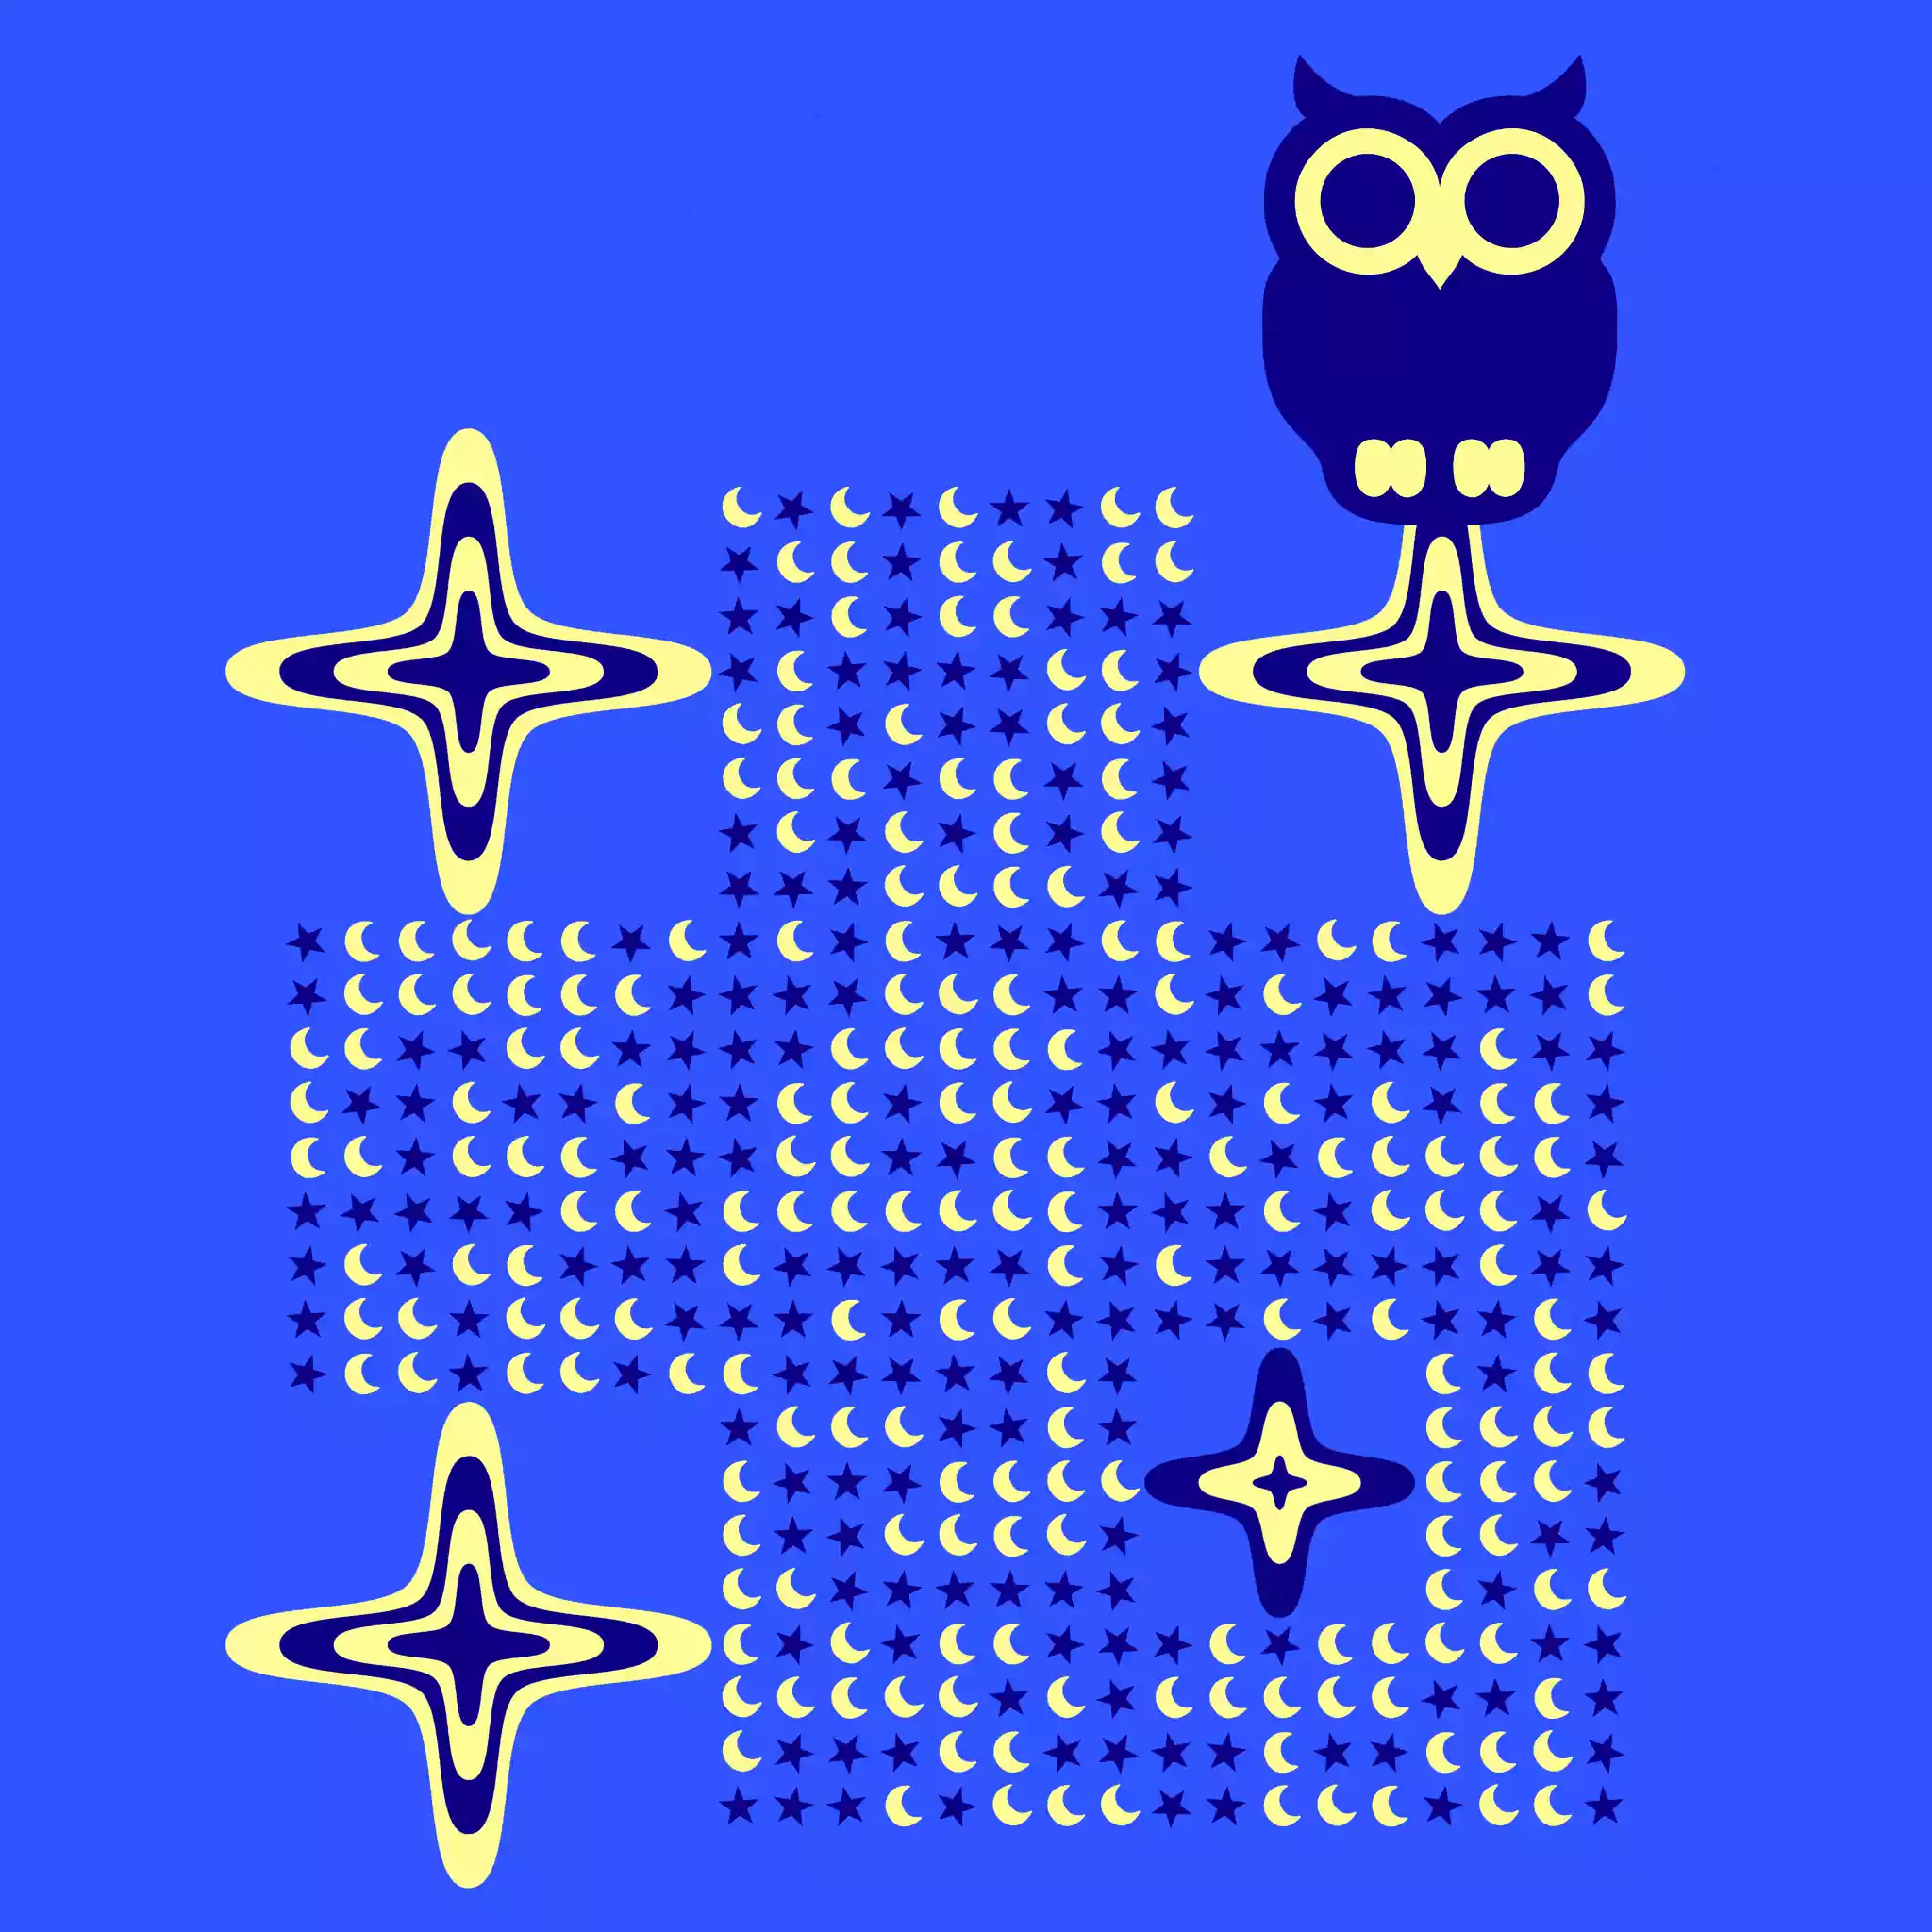 QrcodeLab online qr code generator - qr code image editor - Night owl stars and moon theme